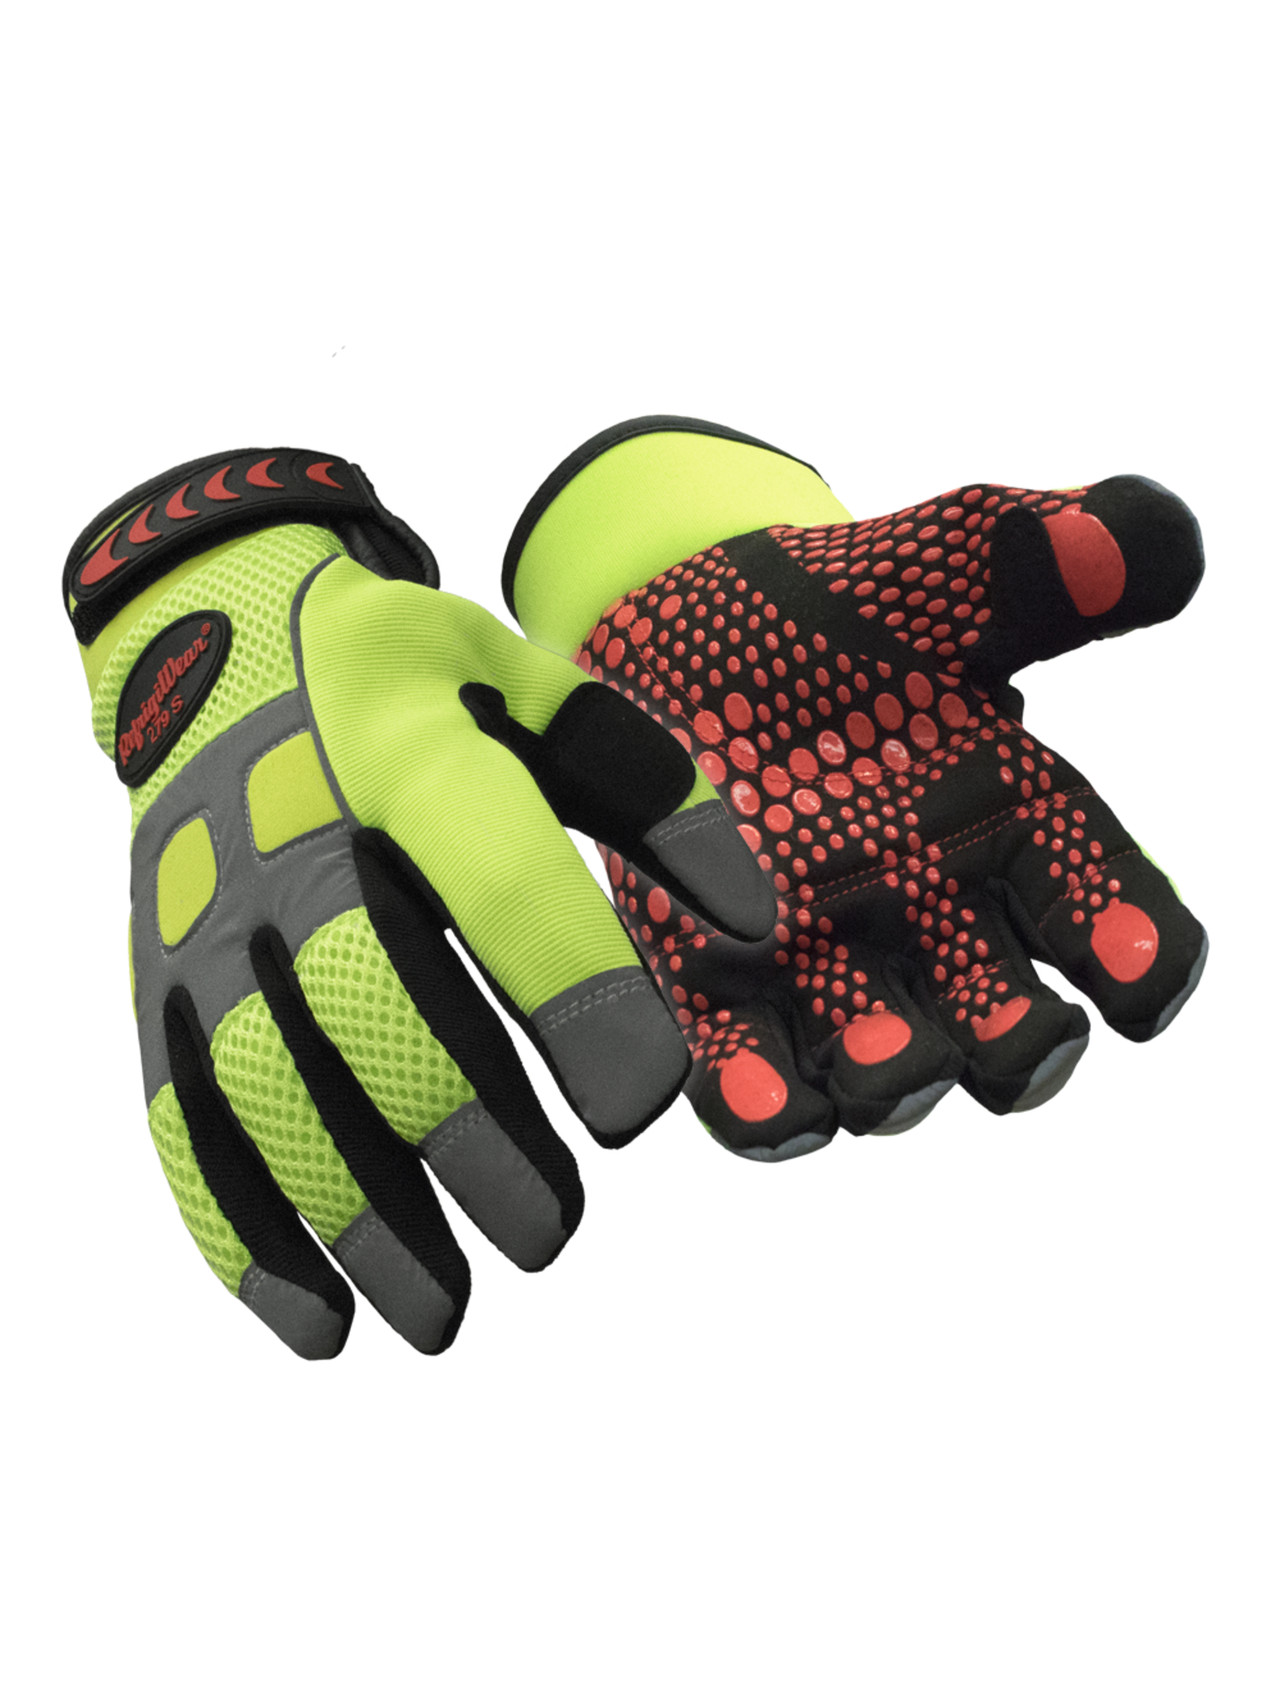 Best Gloves for Warehouse Work 2023